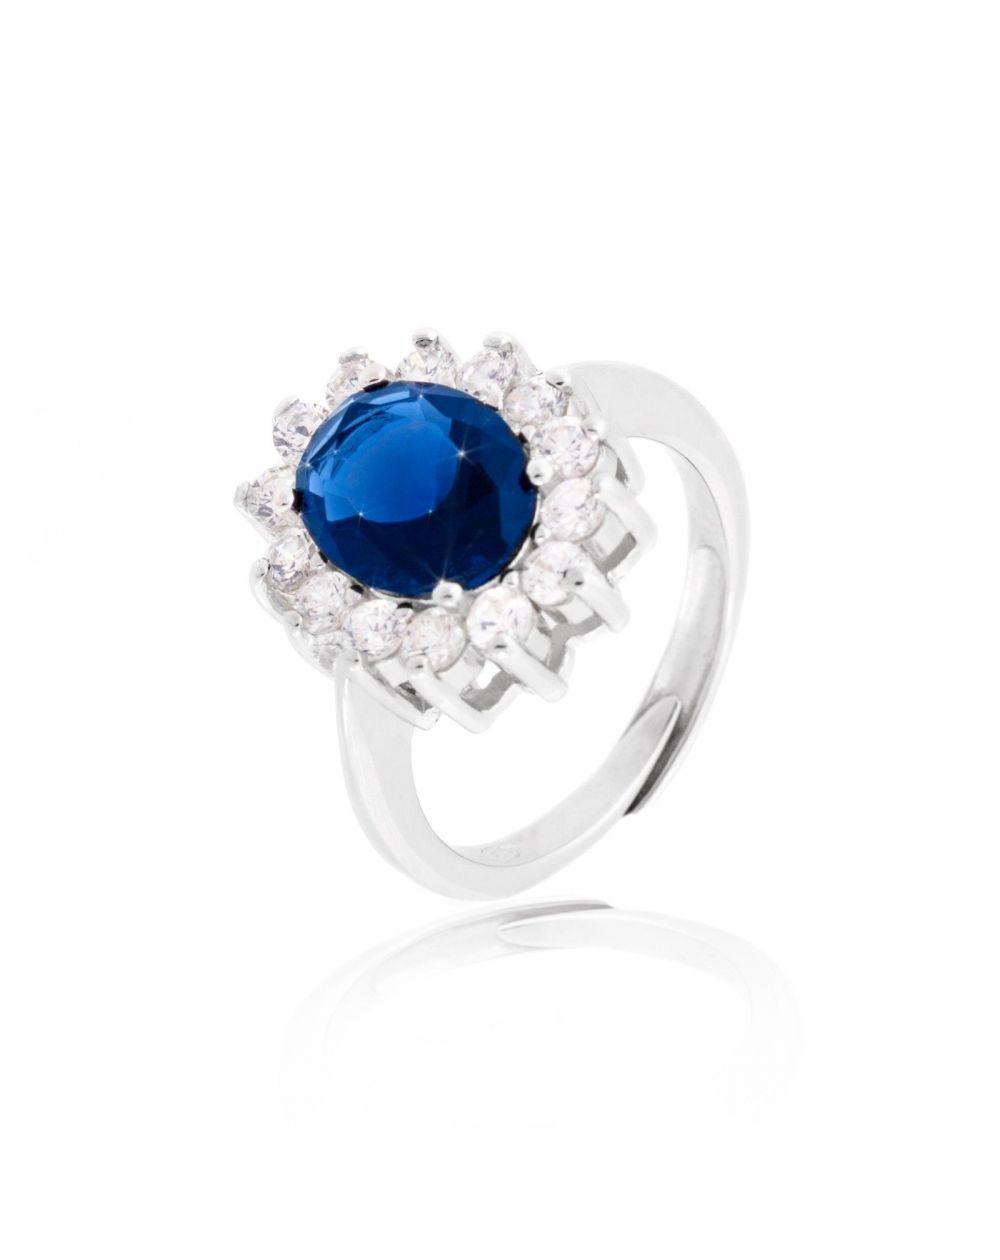 Bague Diana bleu saphir - Bijoux en argent - Bague ajustable